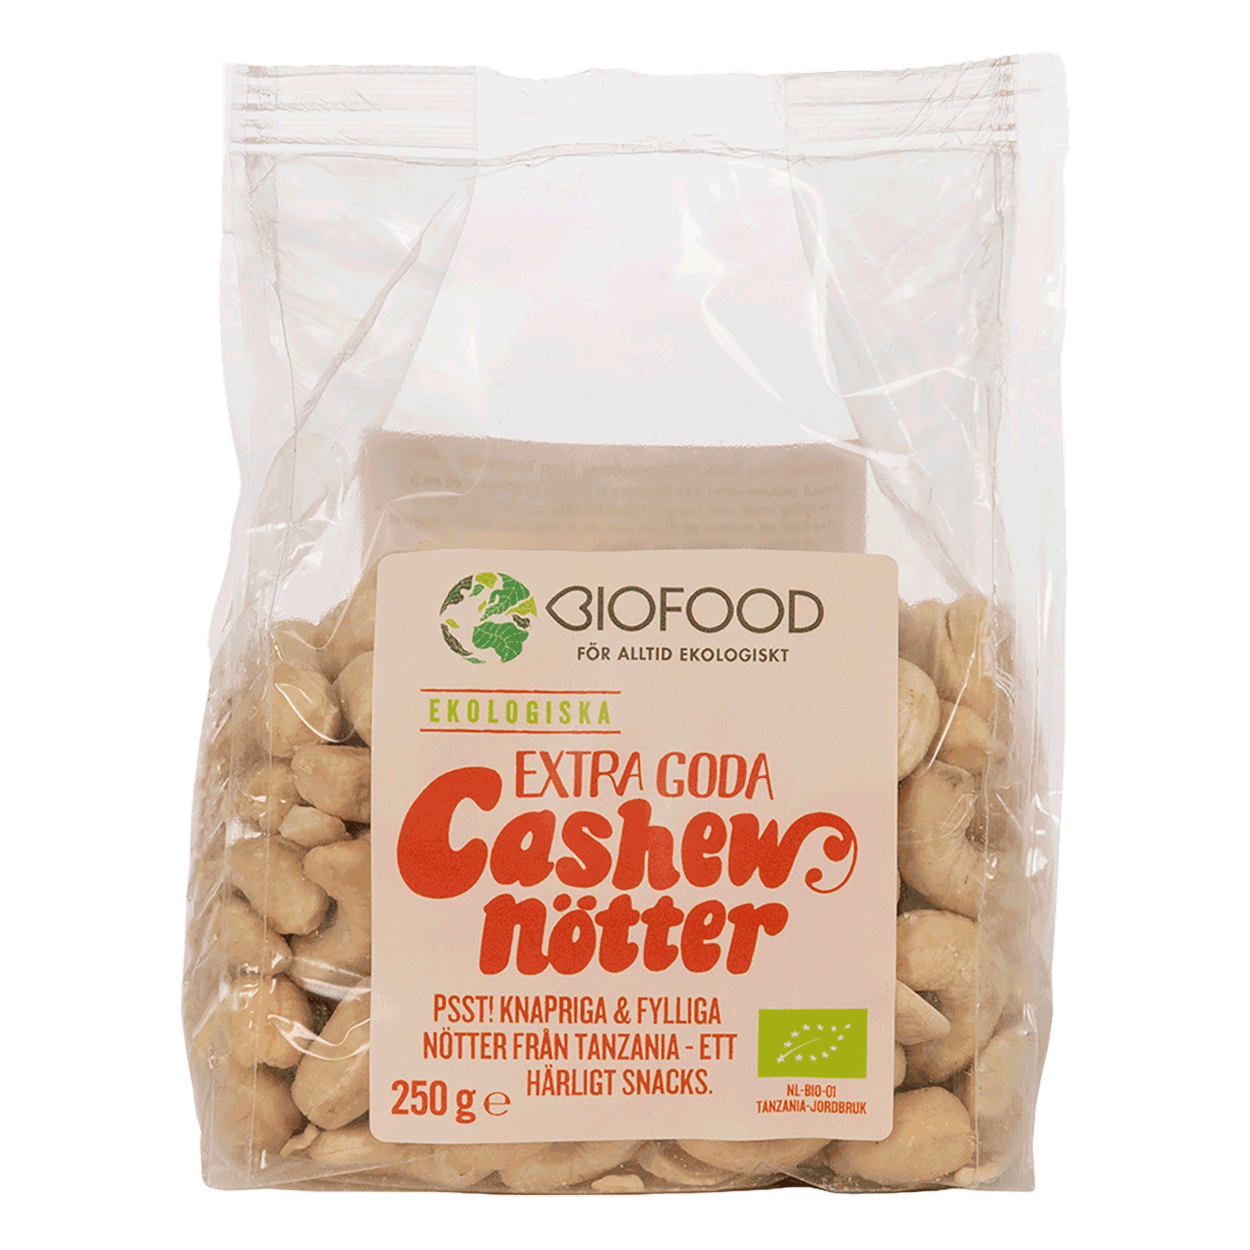 Biofood's Cashew whole'